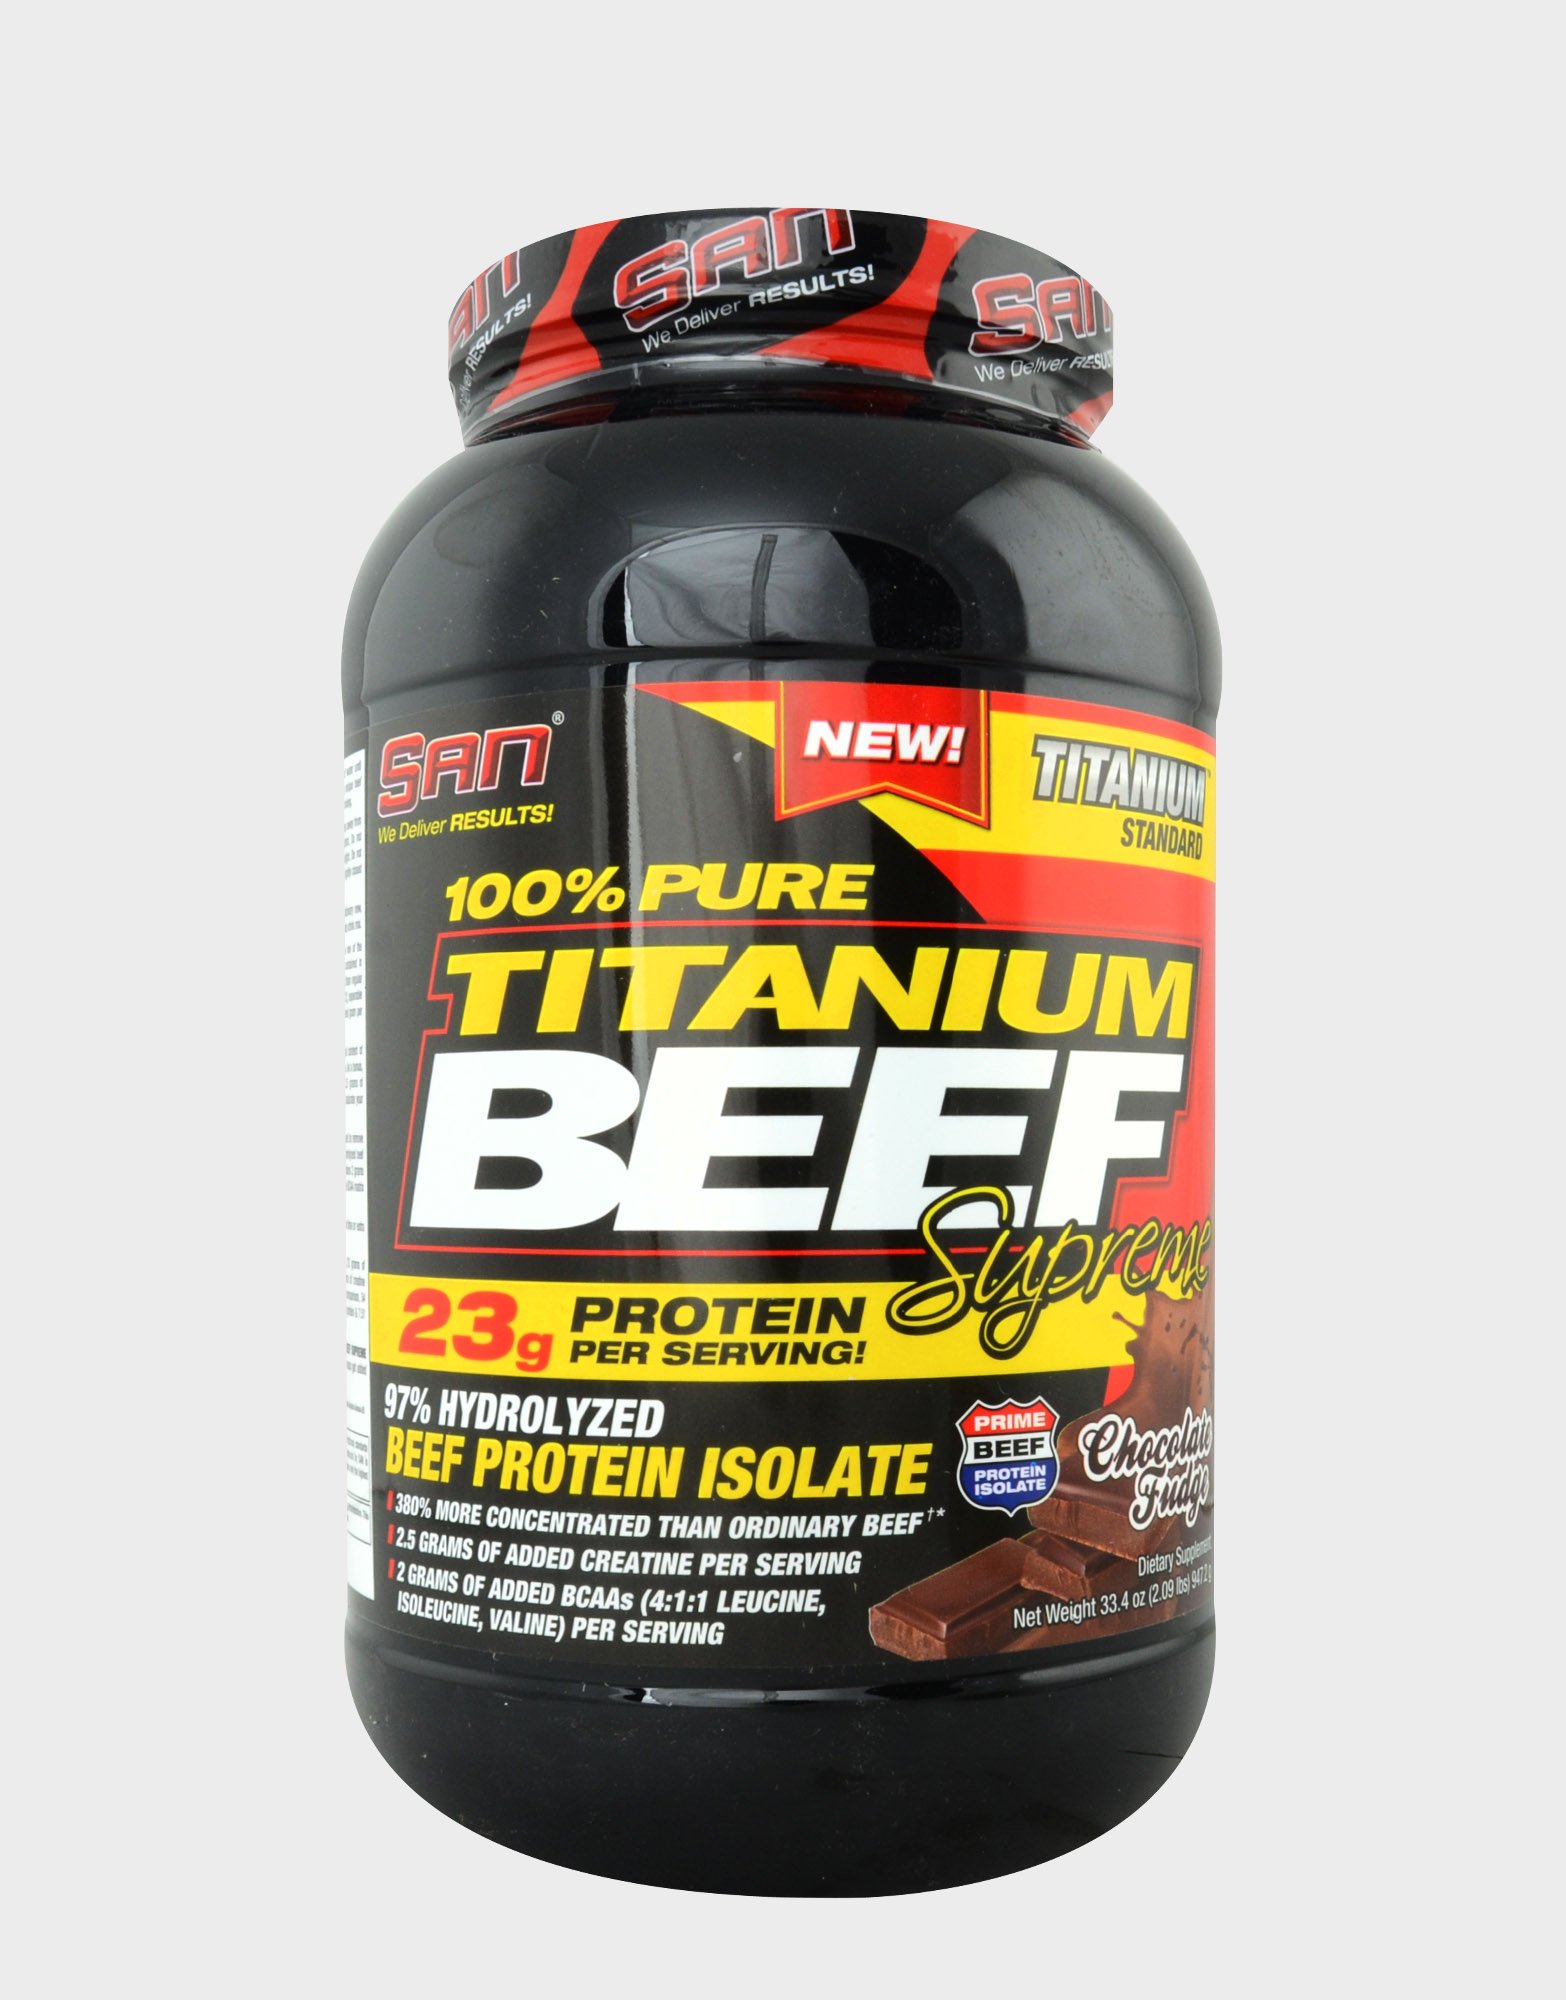 100% Pure Titanium Beef Supreme, 947 g, San. Proteinas de carne de vaca. 